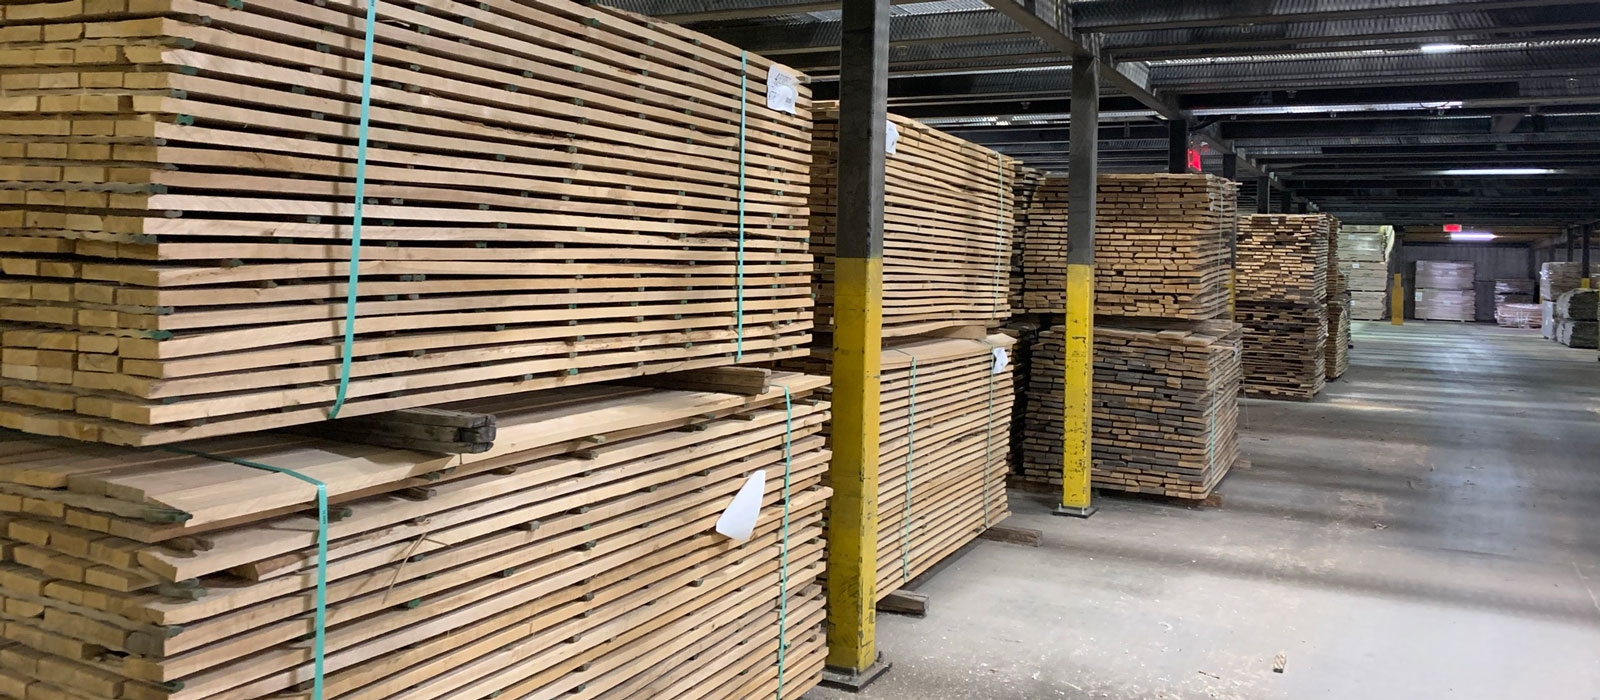 Stacks of wet lumber under production line